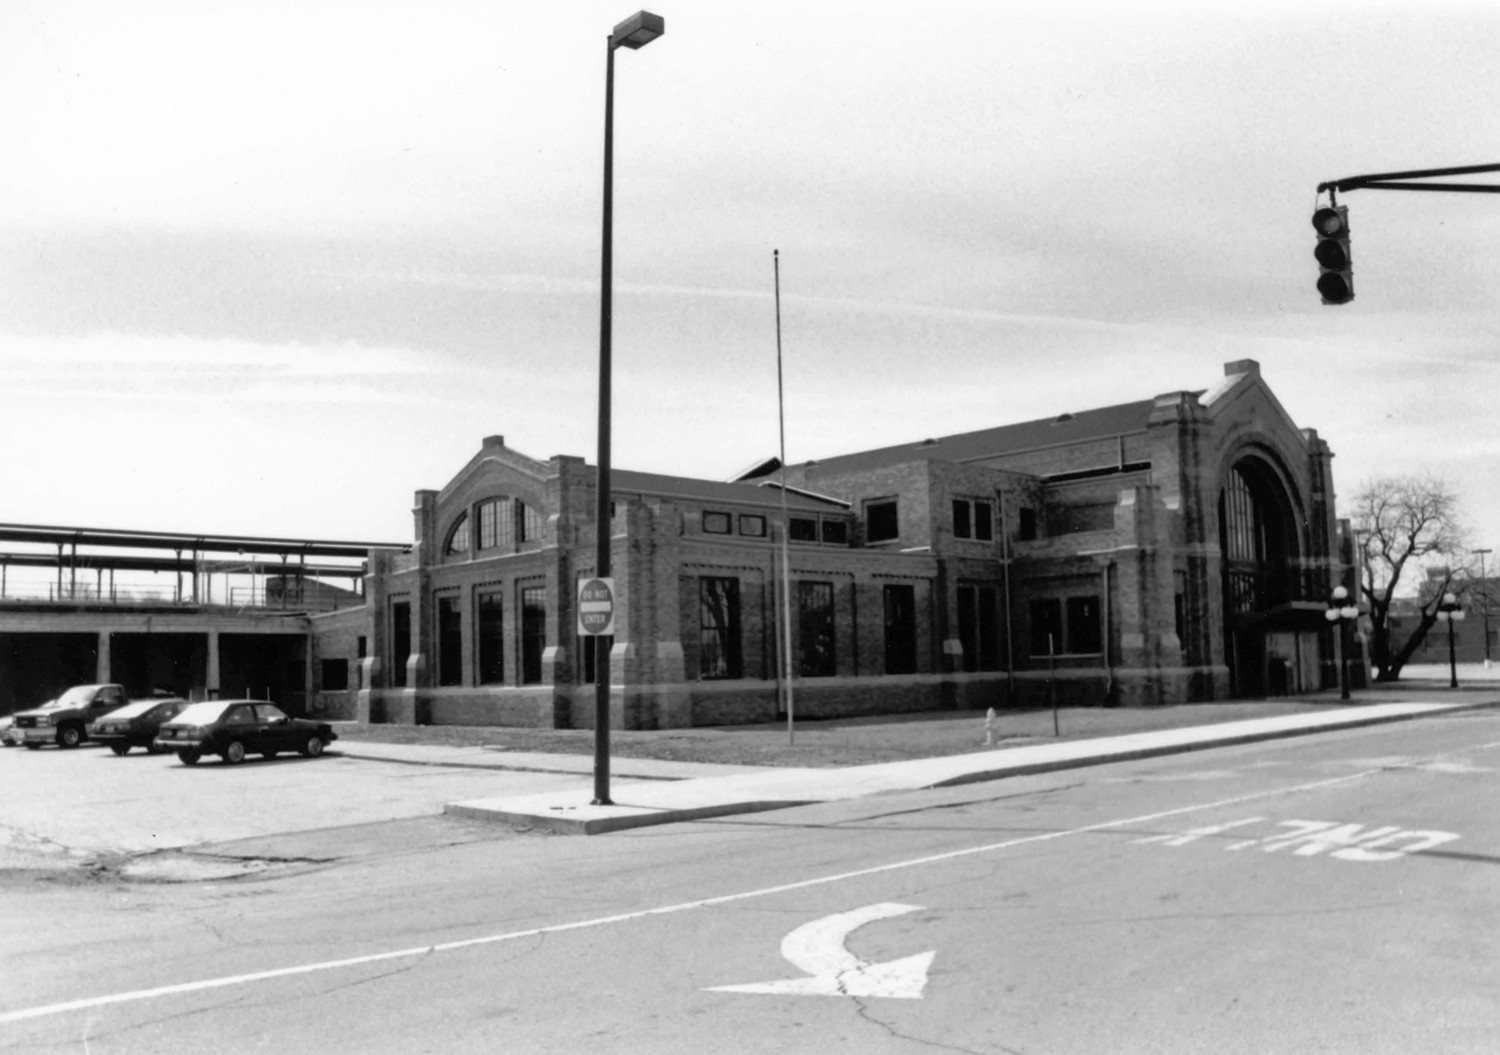 Pennsylvania Railroad Station - Baker Street Station, Fort Wayne Indiana Looking southwest,  passenger station facade. (1997)